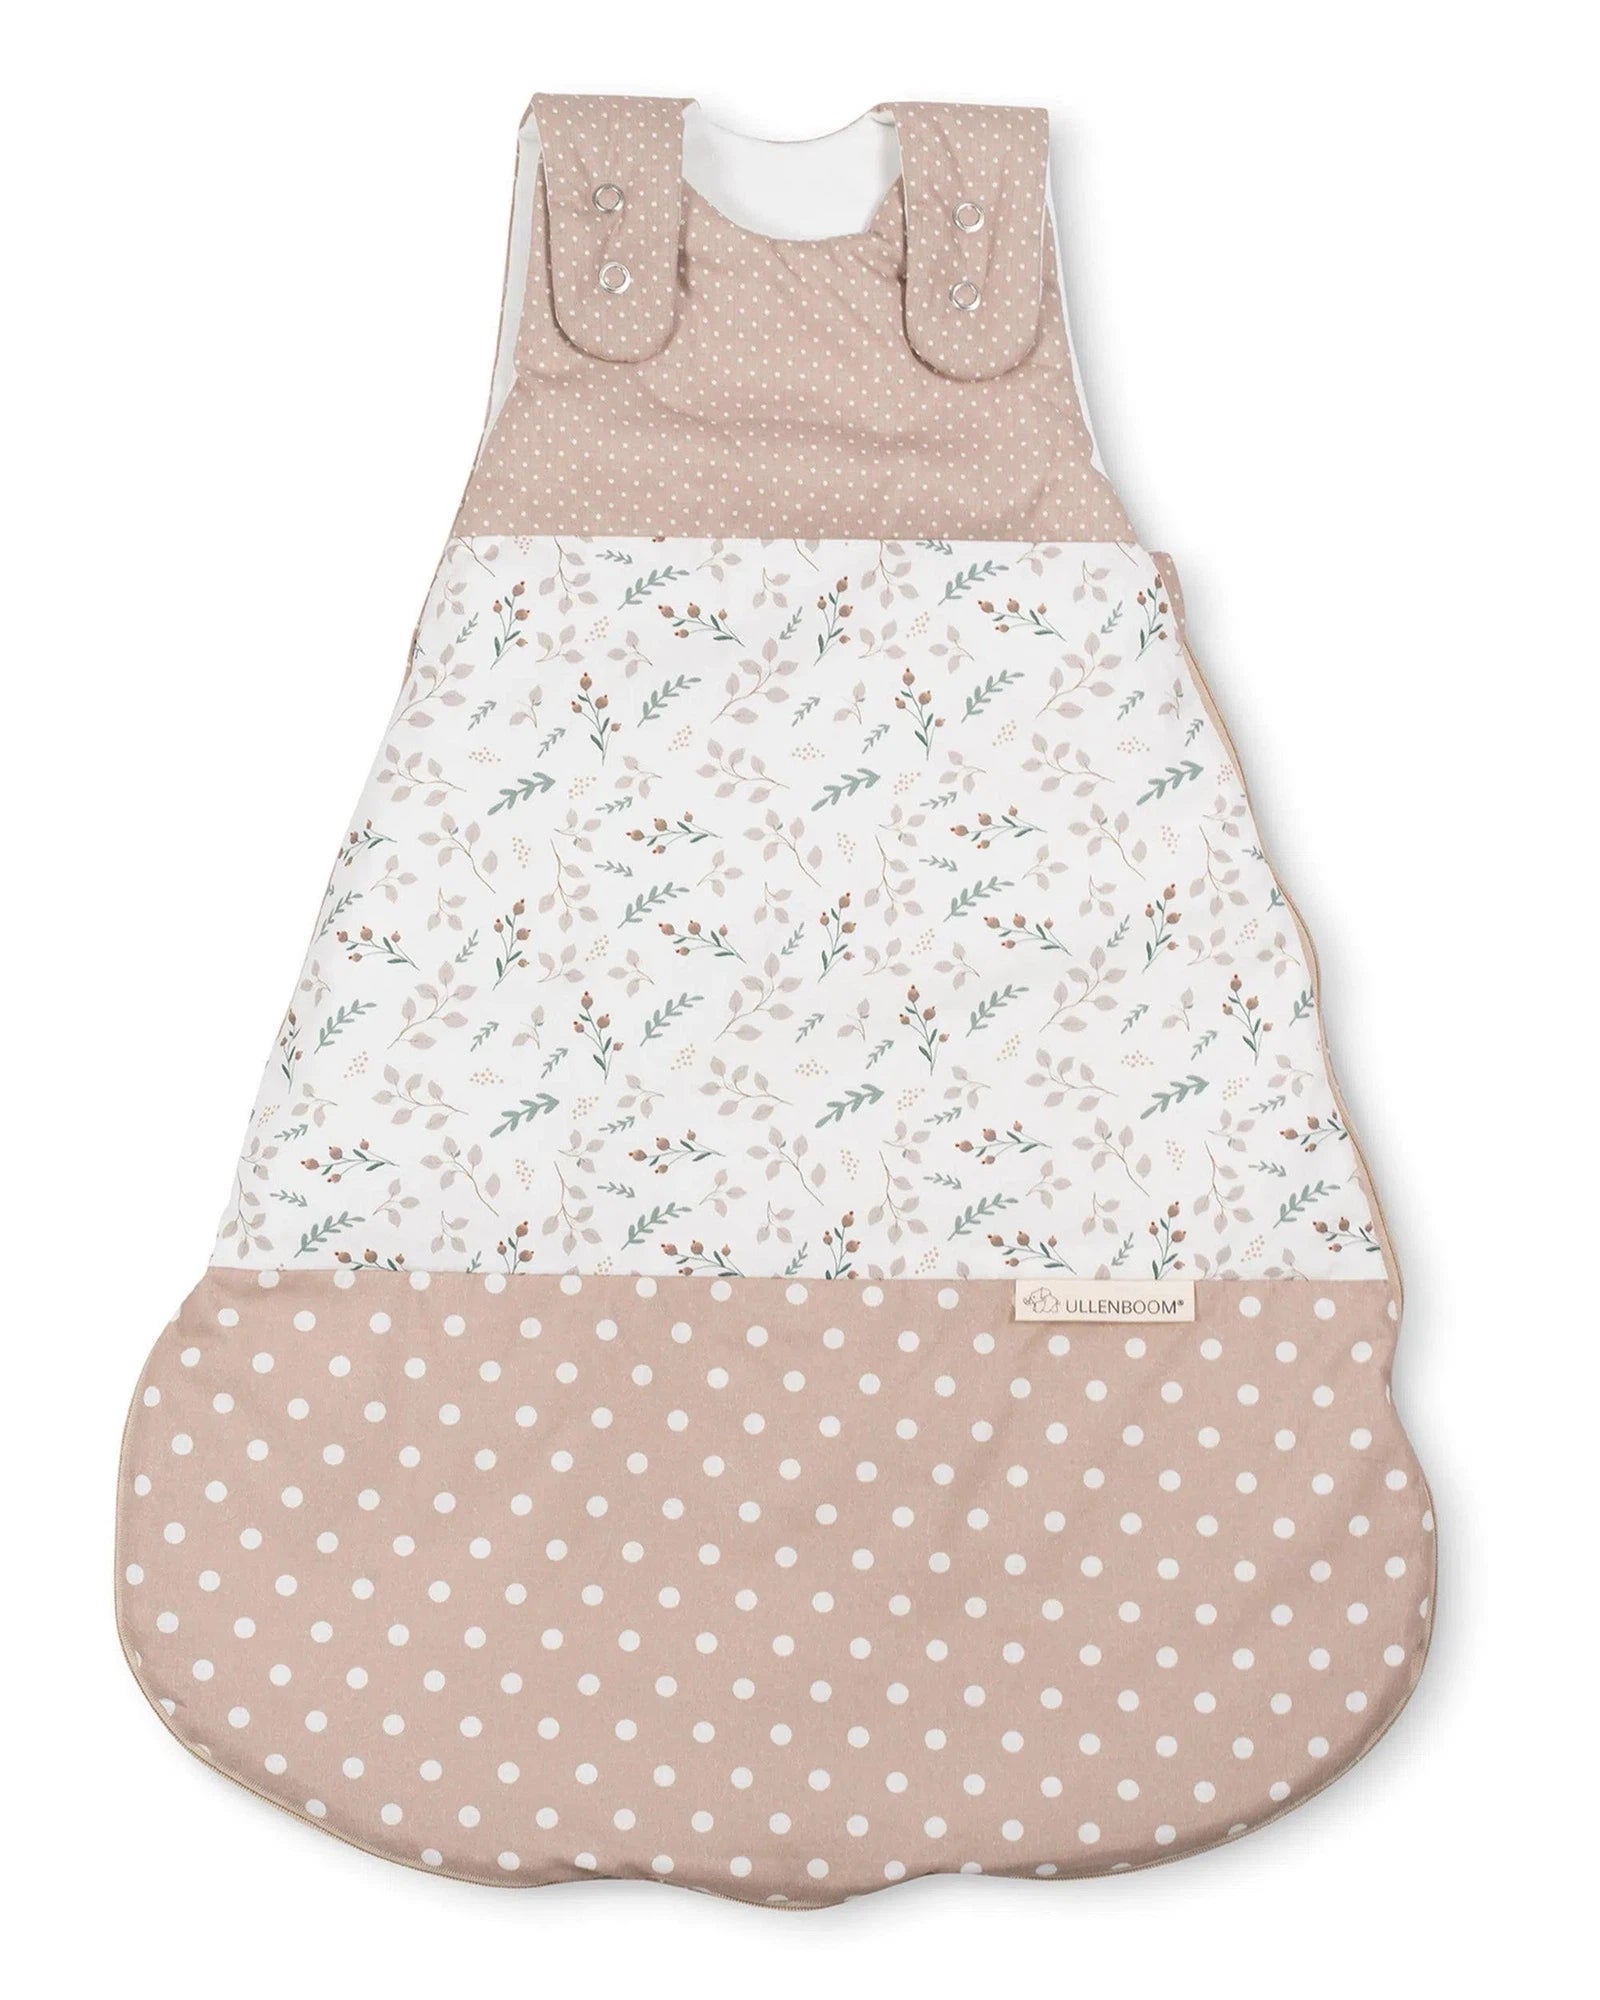 Baby Schlafsack SANDBLUME-ULLENBOOM-10-18 Monate | 80-86 cm-ULLENBOOM Baby